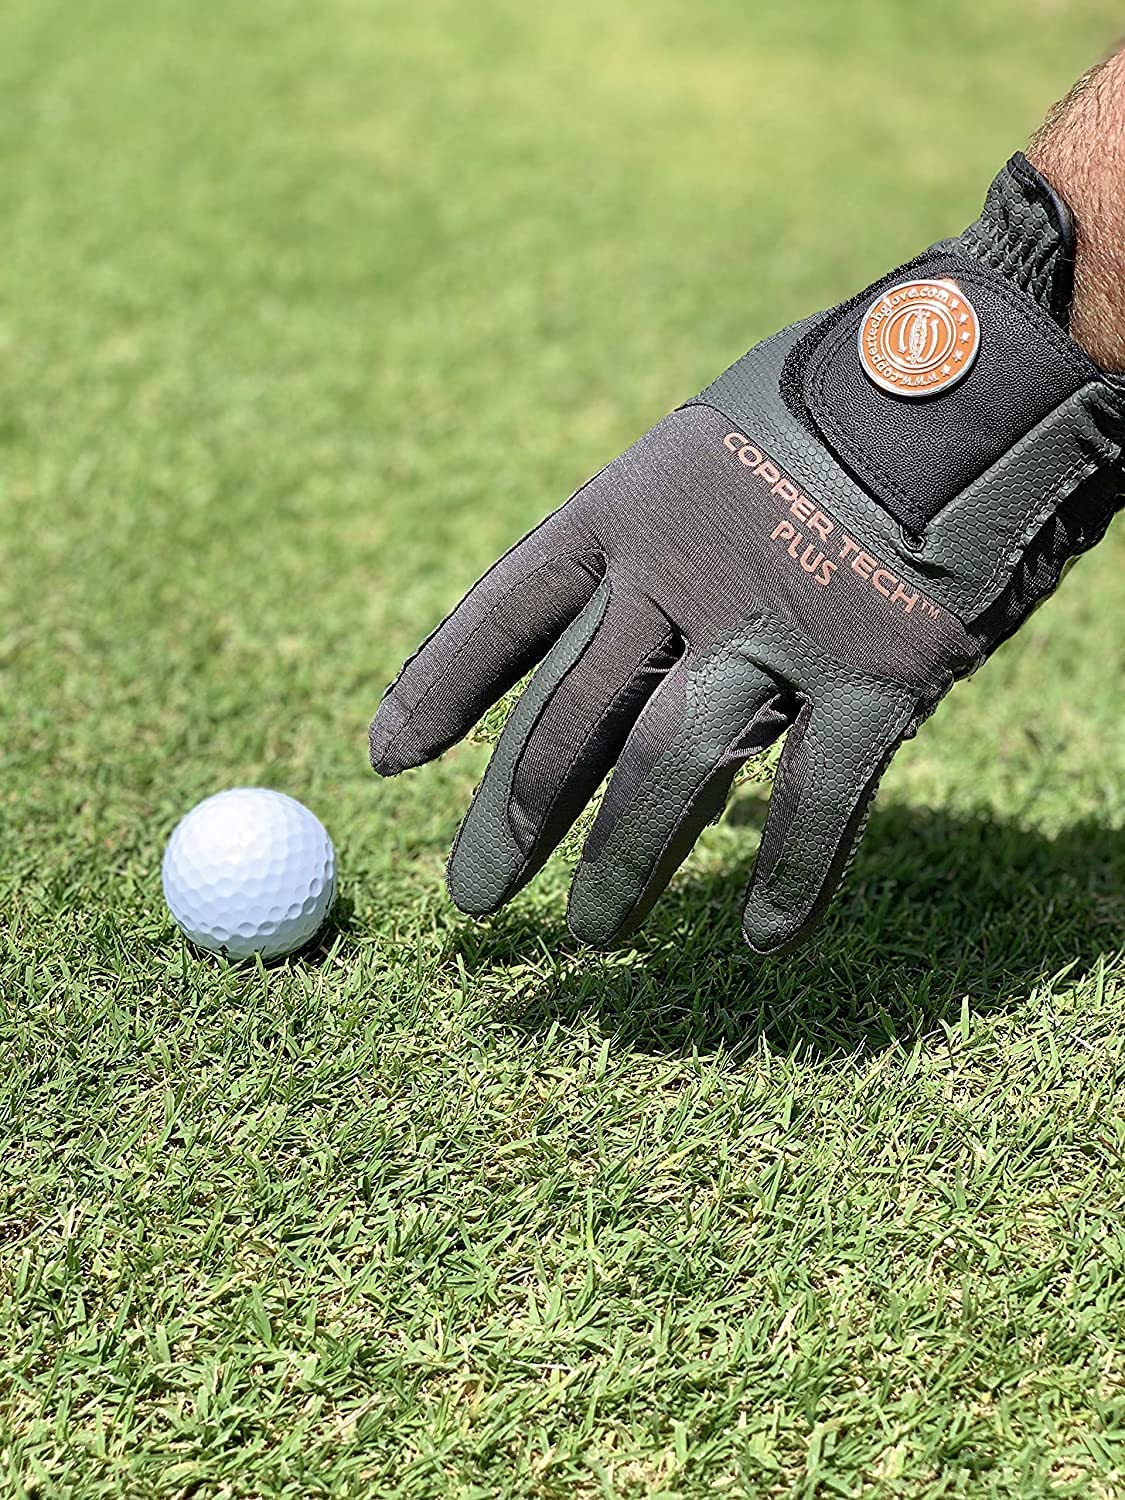 Copper Tech Men Charcoal Gray/Combi Spider Tacky Golf Glove (2 Packs)